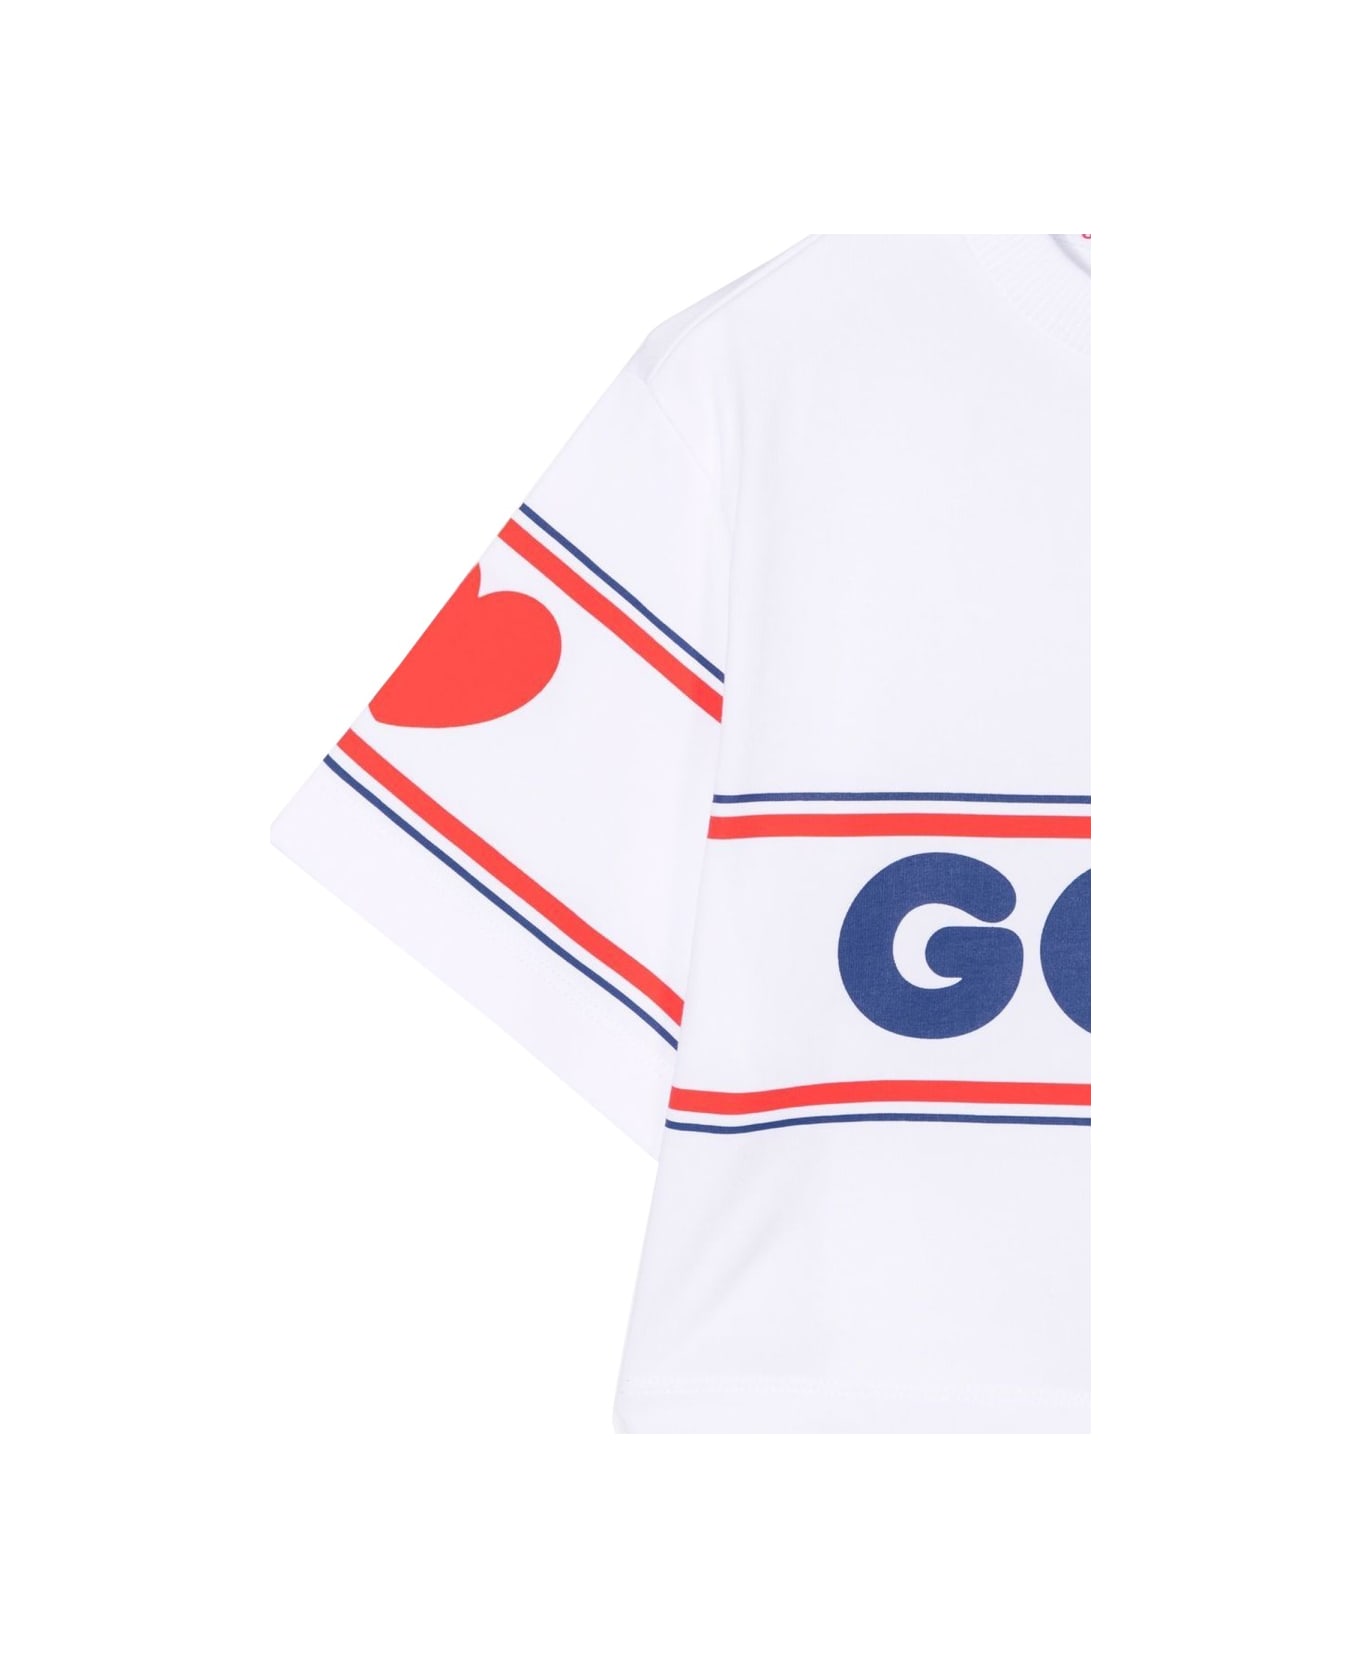 GCDS Mini T Shirt - WHITE Tシャツ＆ポロシャツ